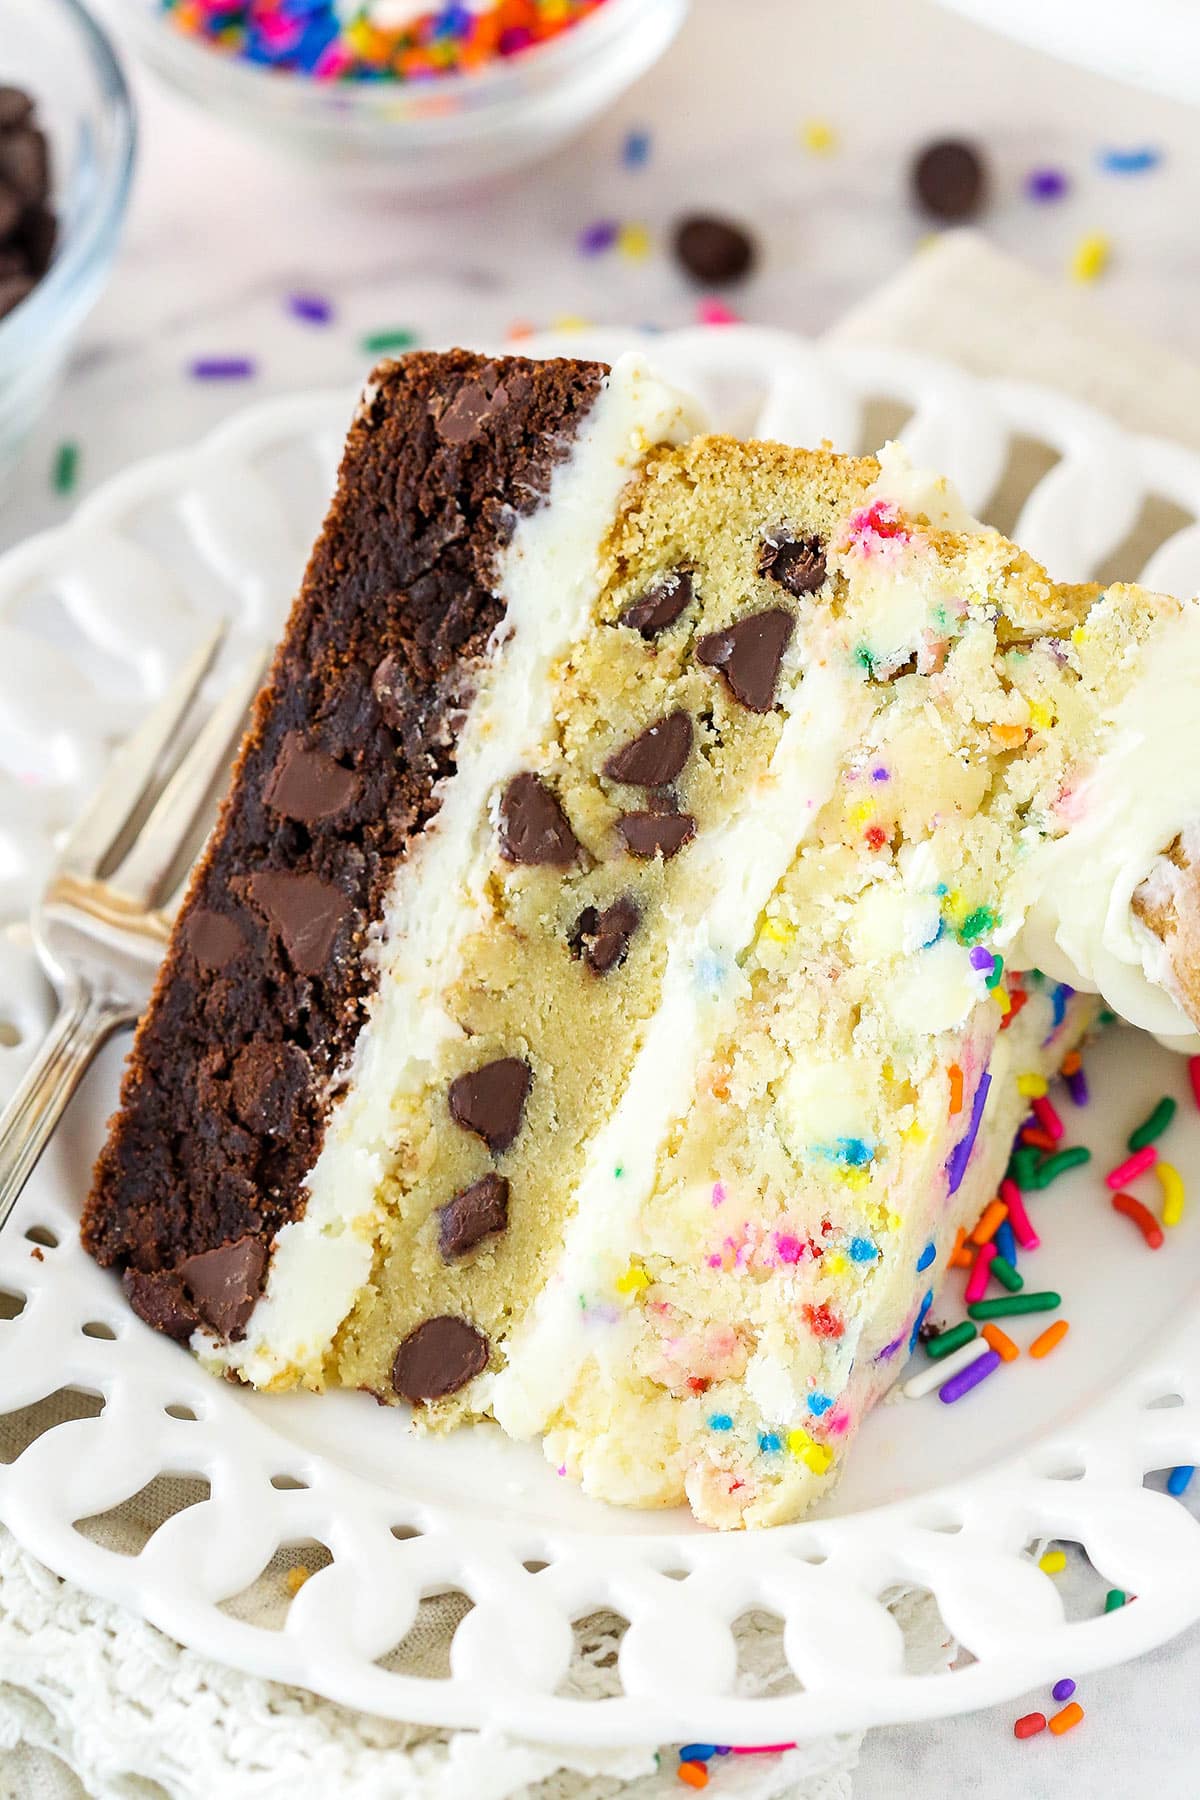 Easy M&M Cake Recipe for July 4th - Mom Loves Baking